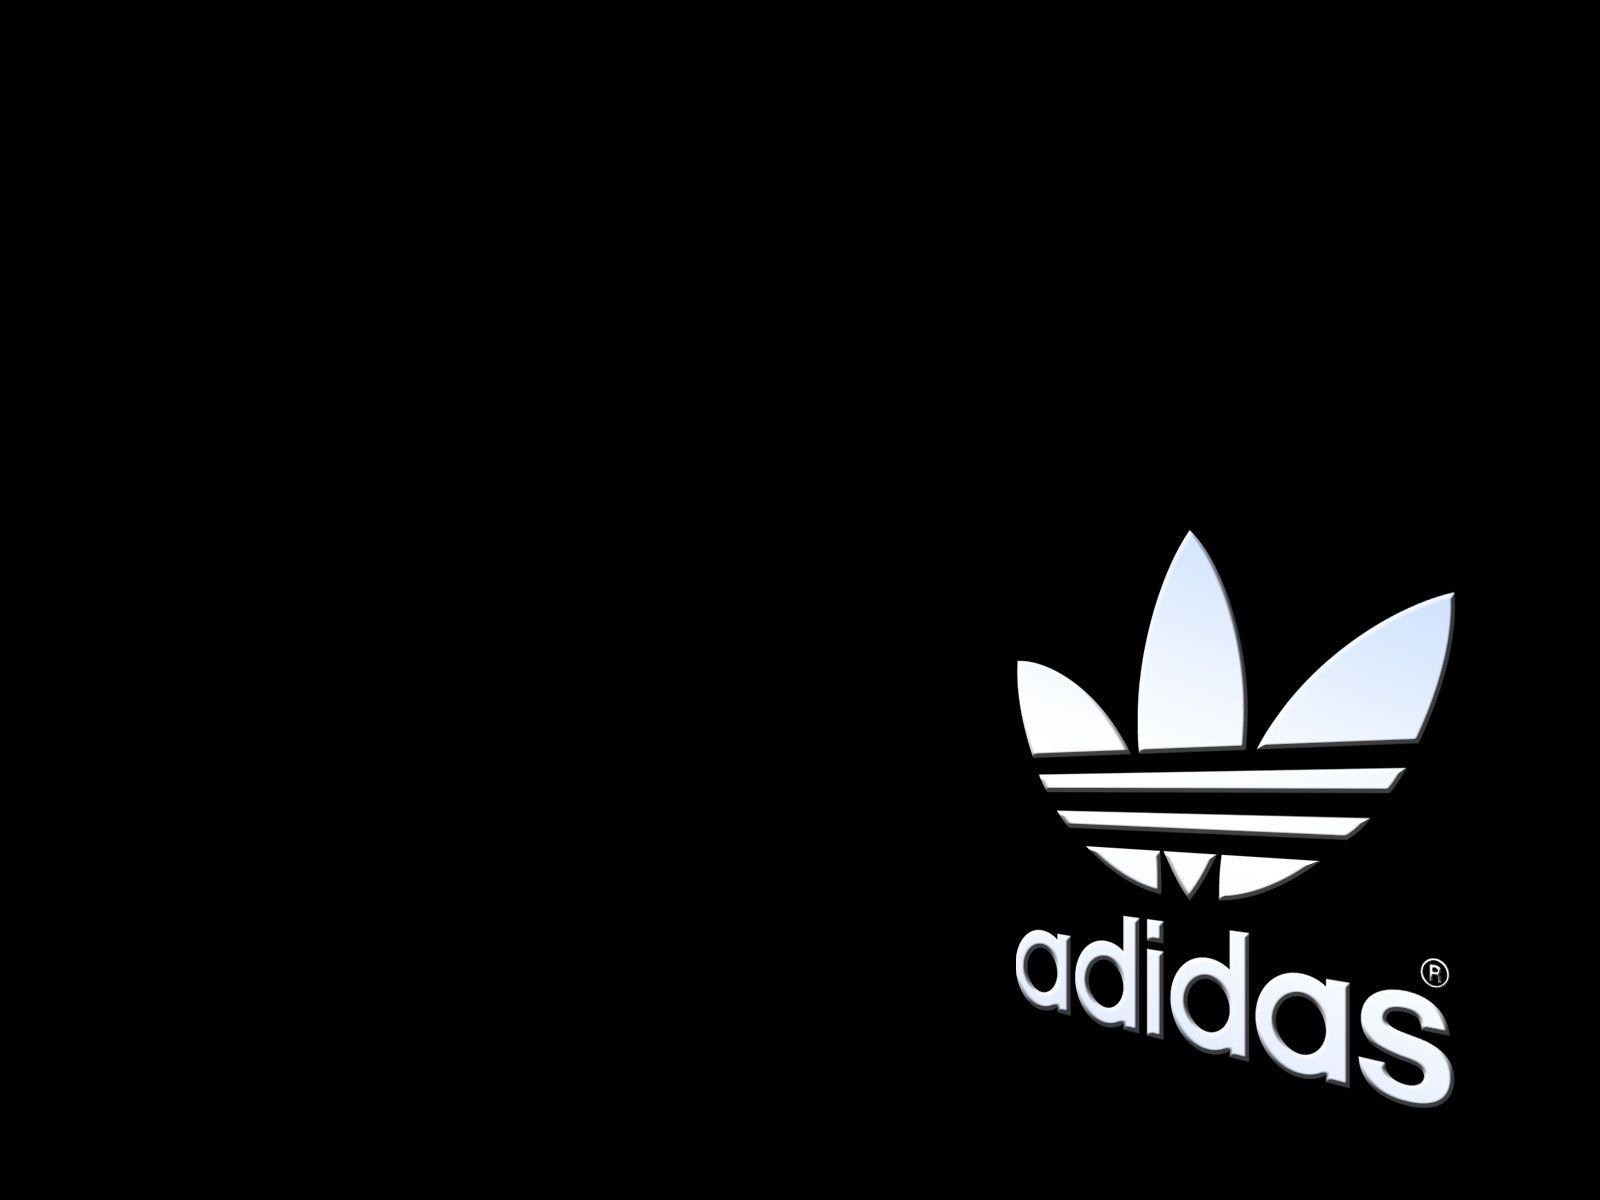 adidas classic. designers. Adidas, Adidas logo, Adidas